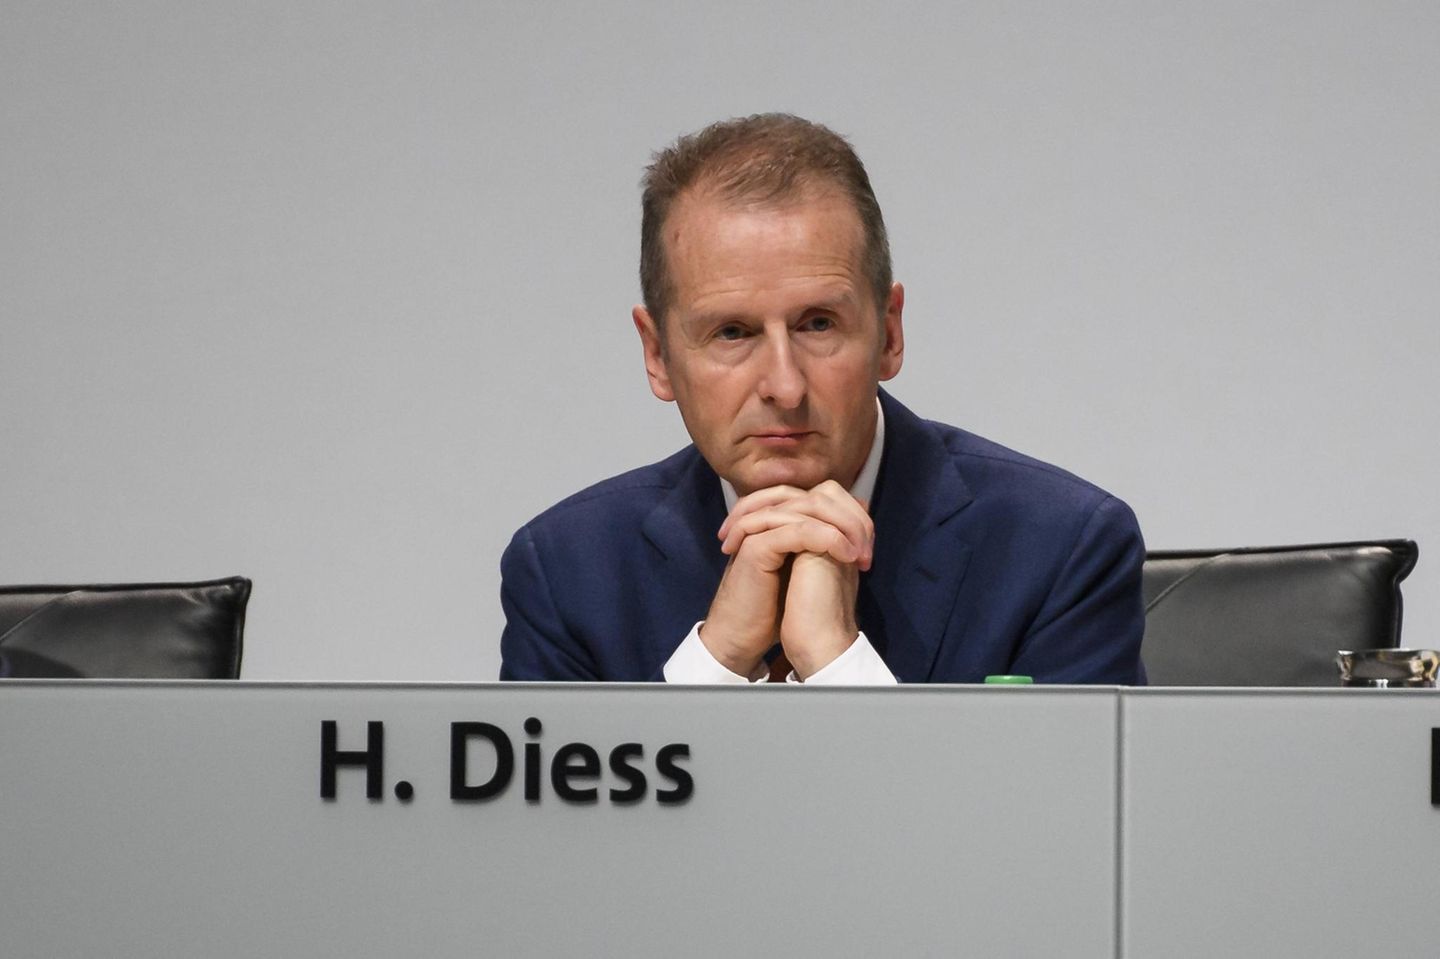 VW-Chef Herbert Diess